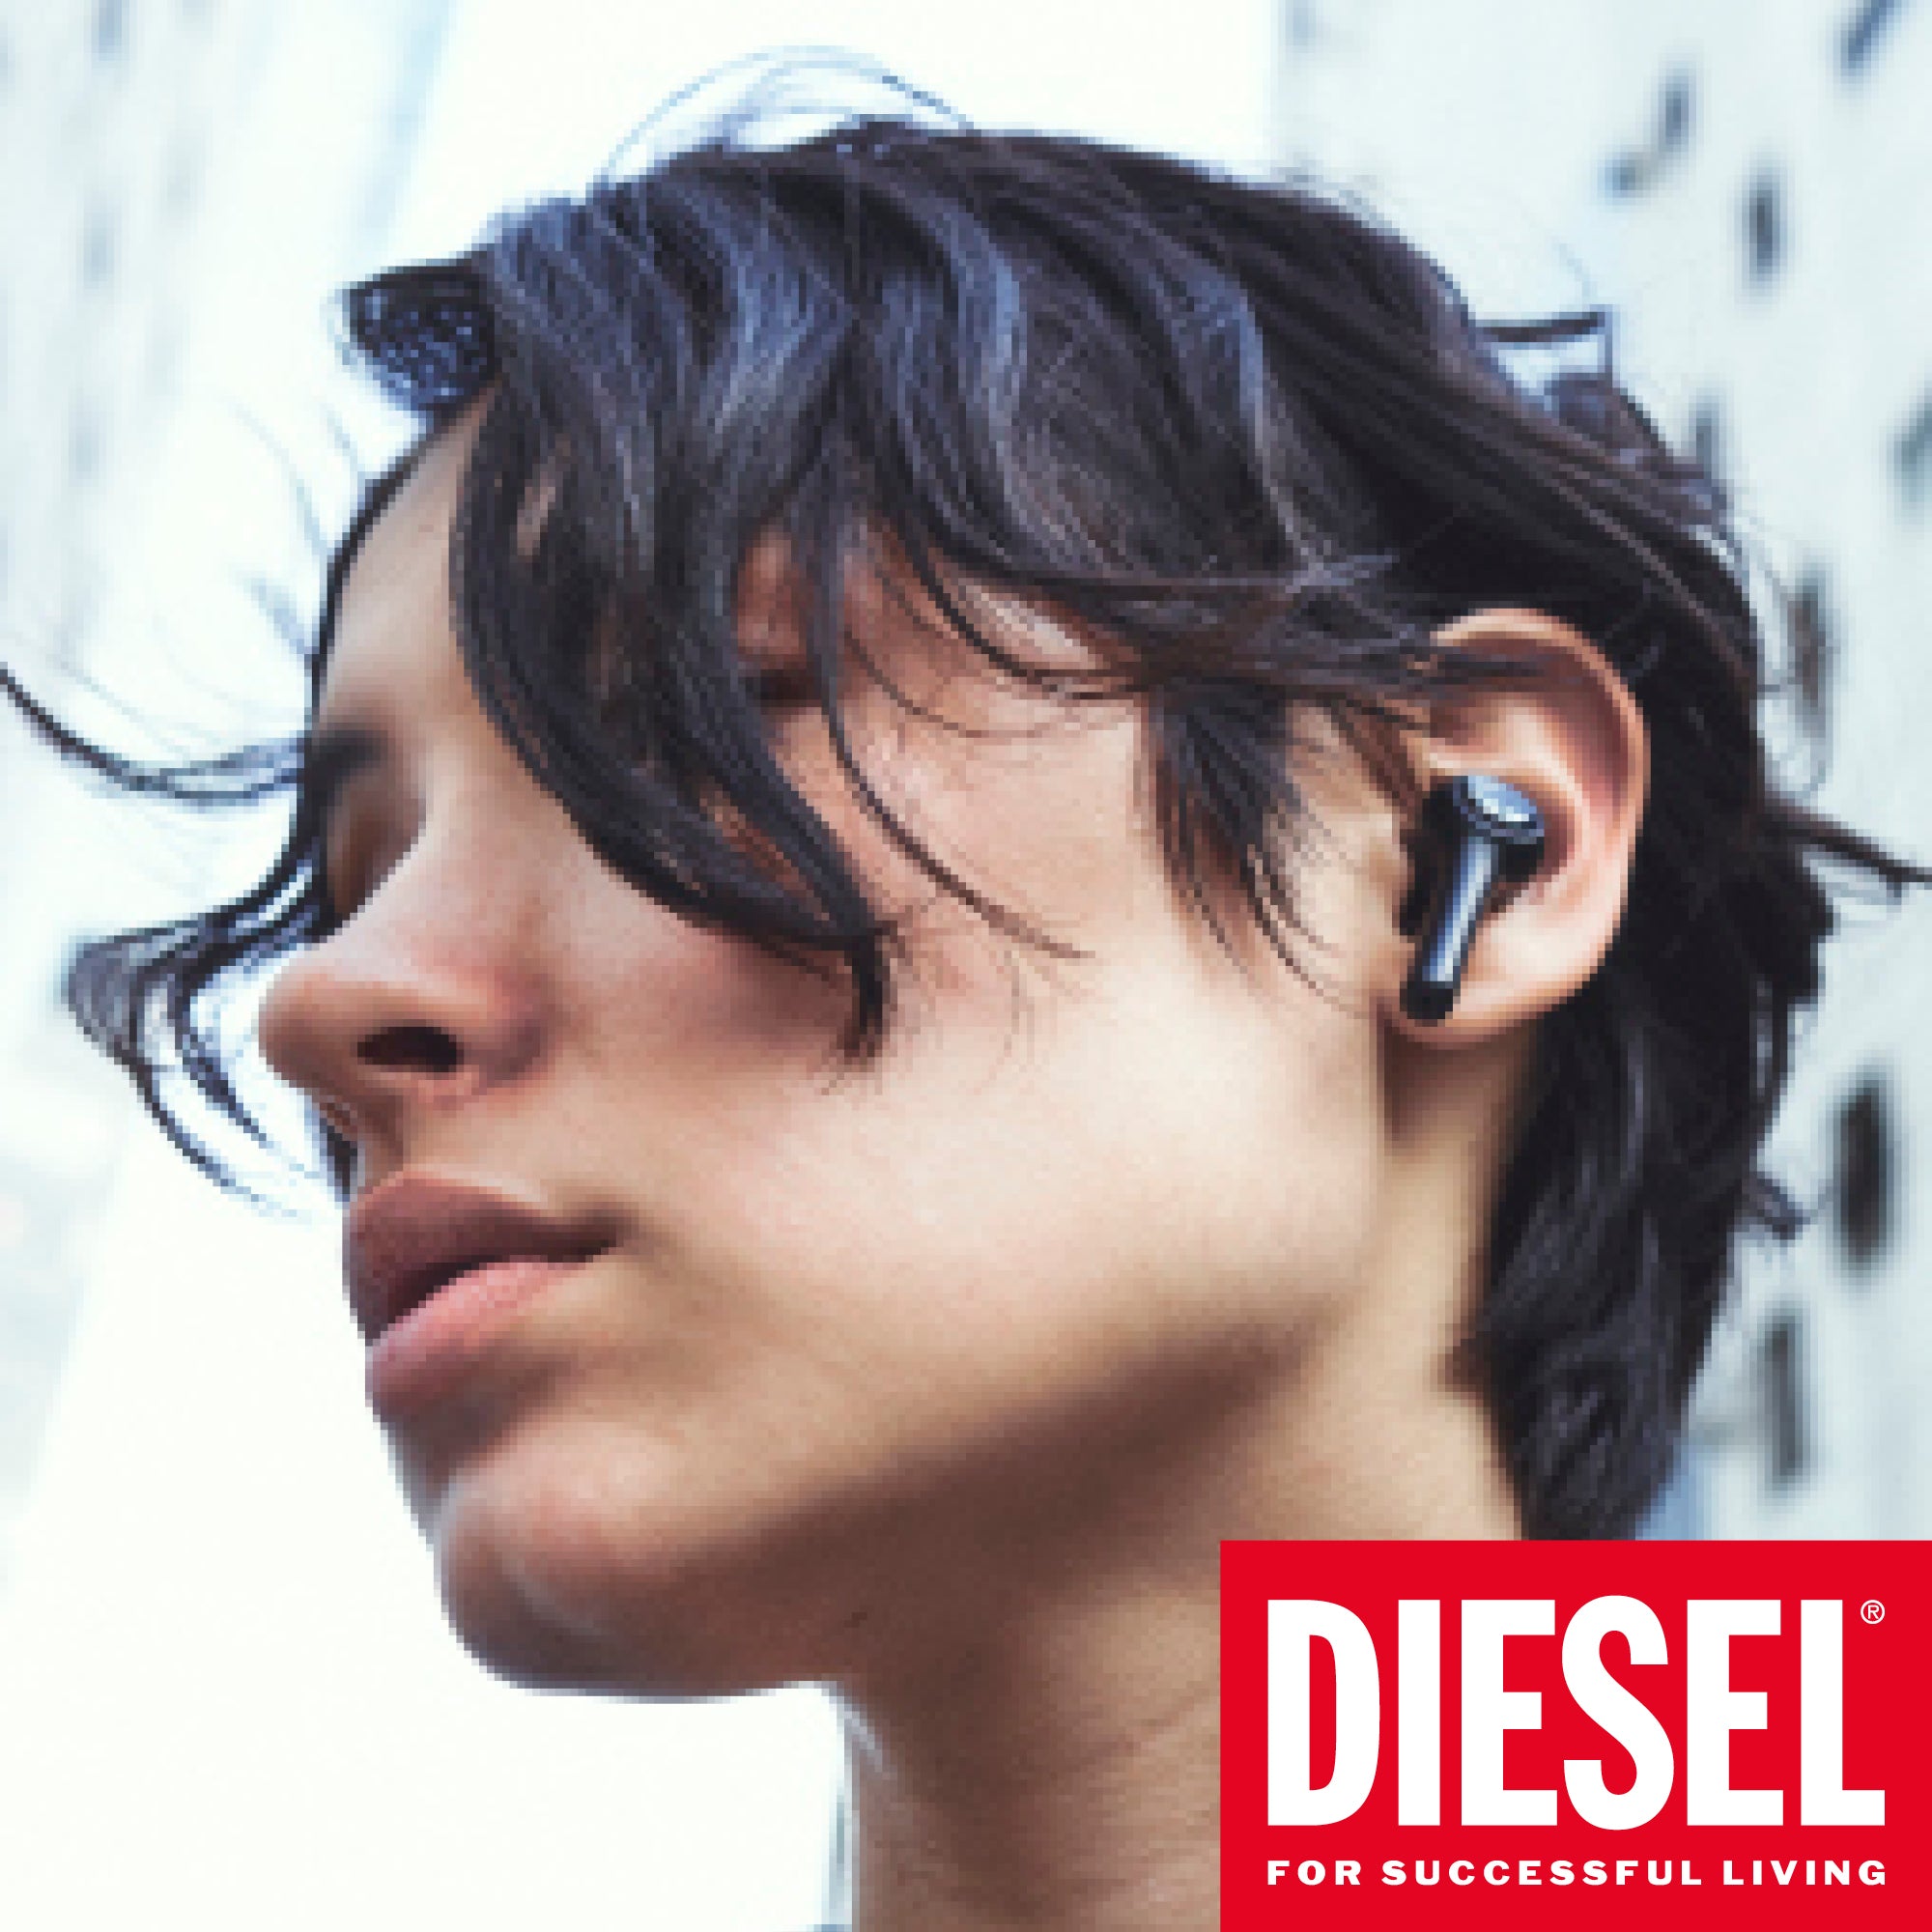 Diesel True Wireless Earbuds Bluetooth 5.0 iPX4 - Black